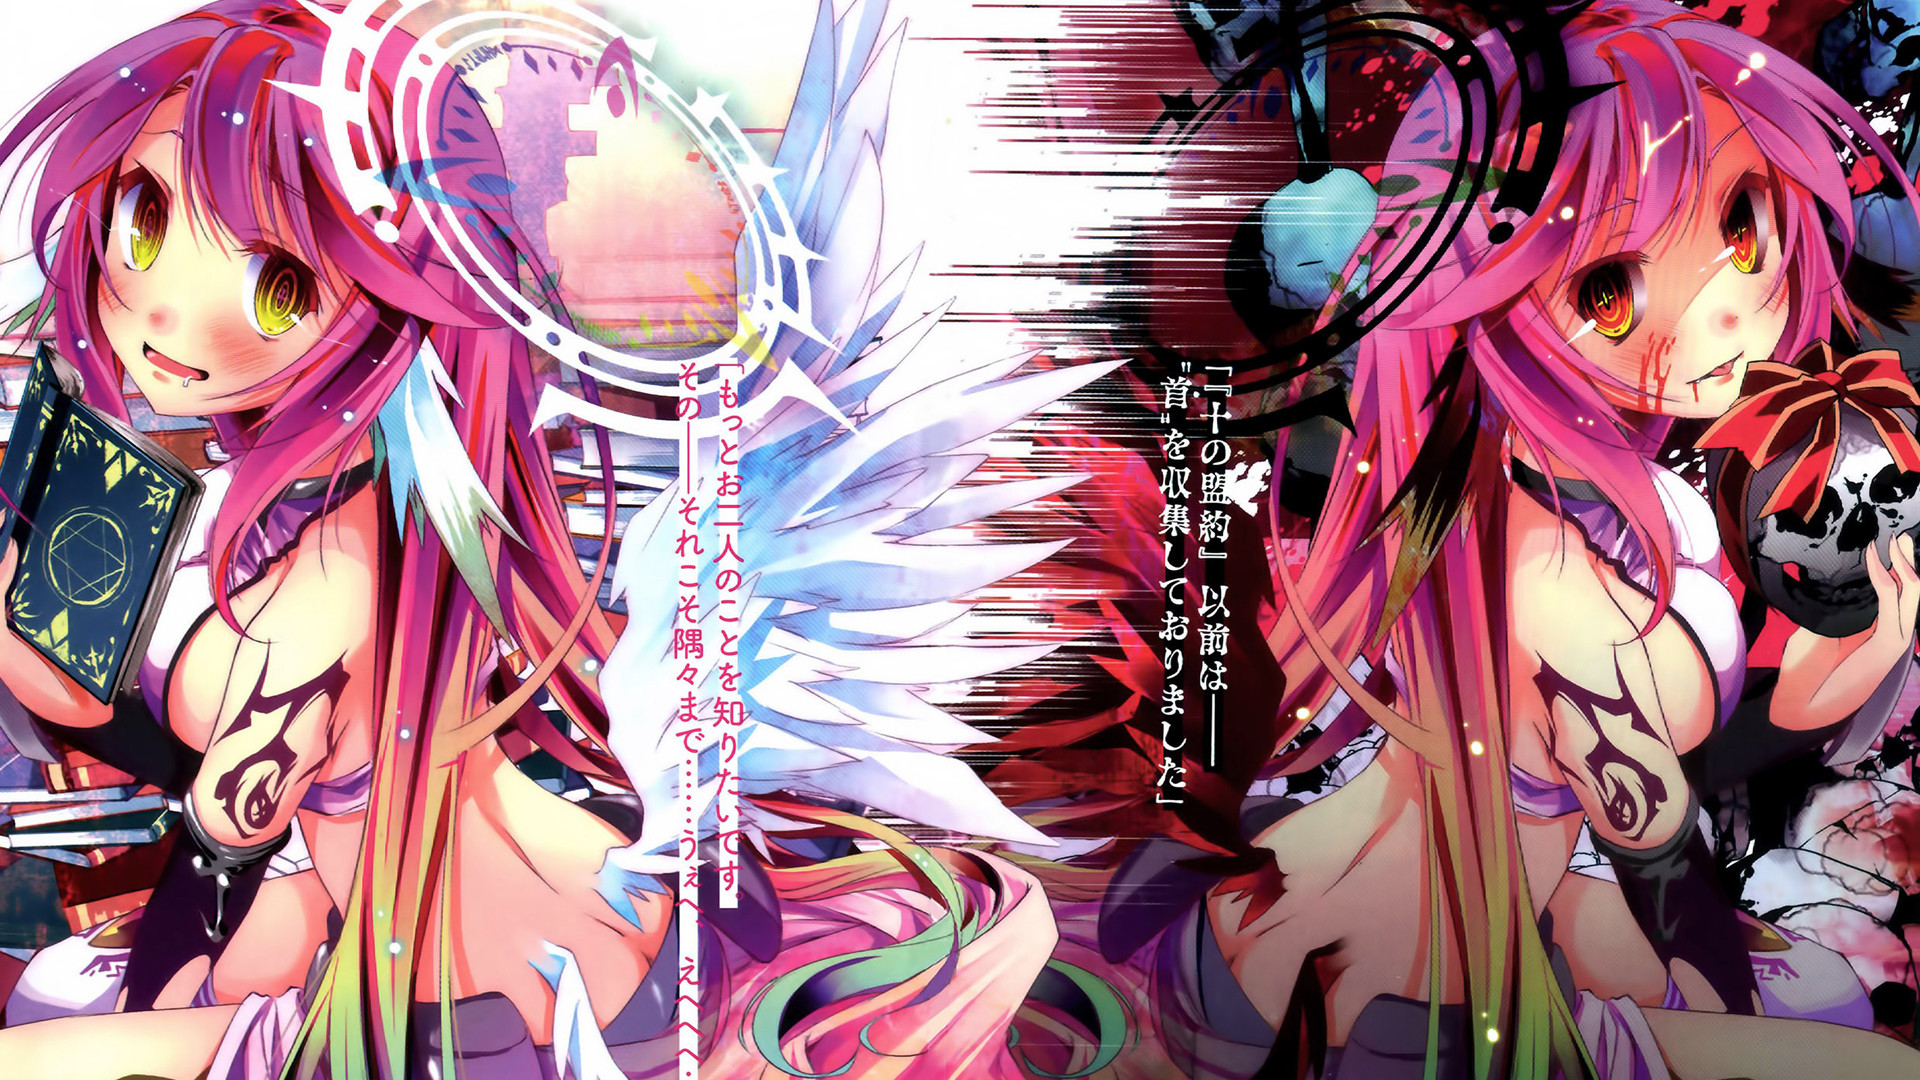 Image for Jibril No Game No Life Anime Girl. Hd 1080P Wallpaper  And